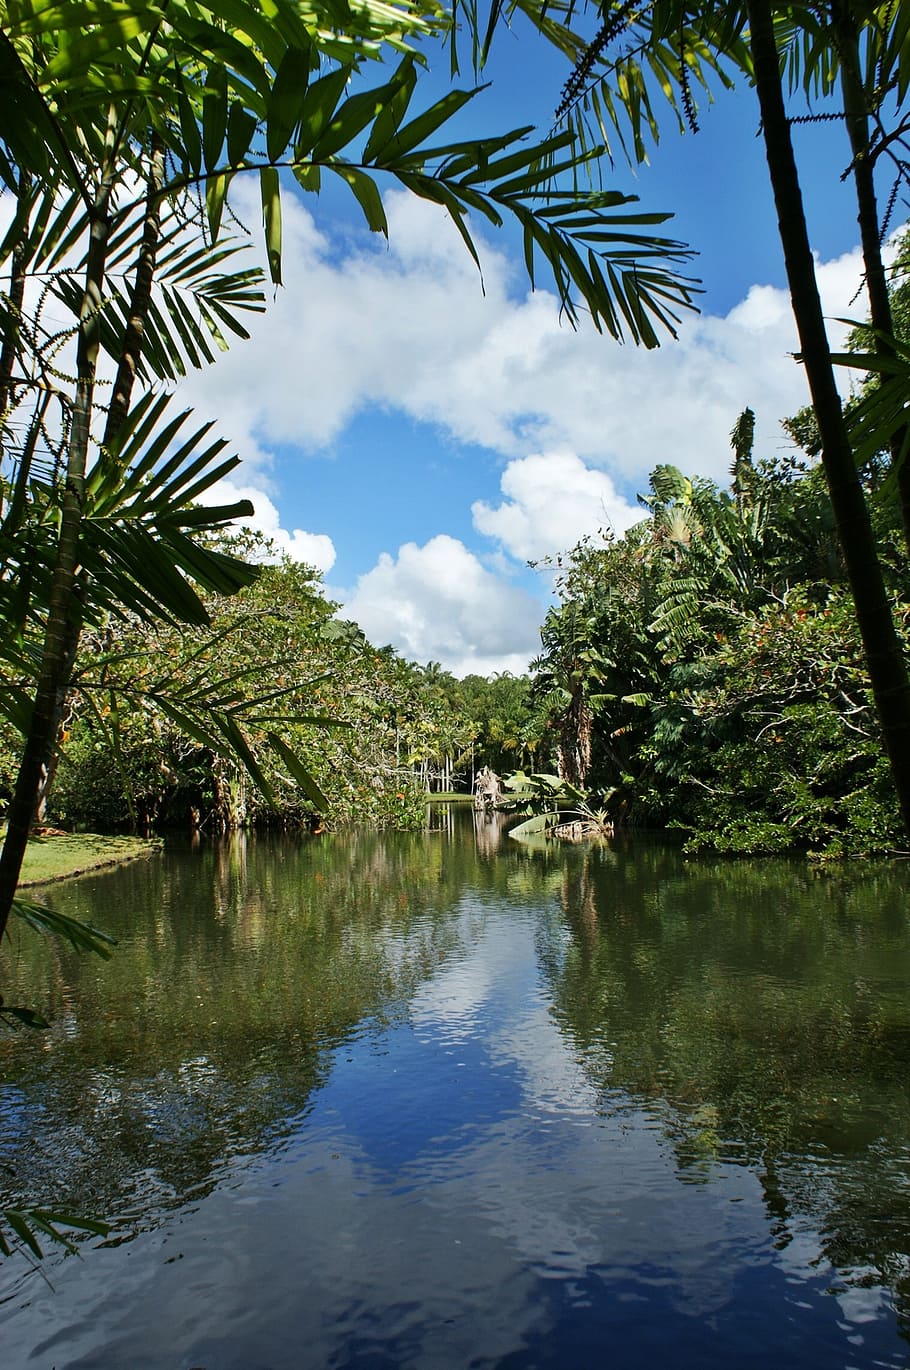 mauritius, lake, palm tree, sky, clouds, landscape, trees, reflection